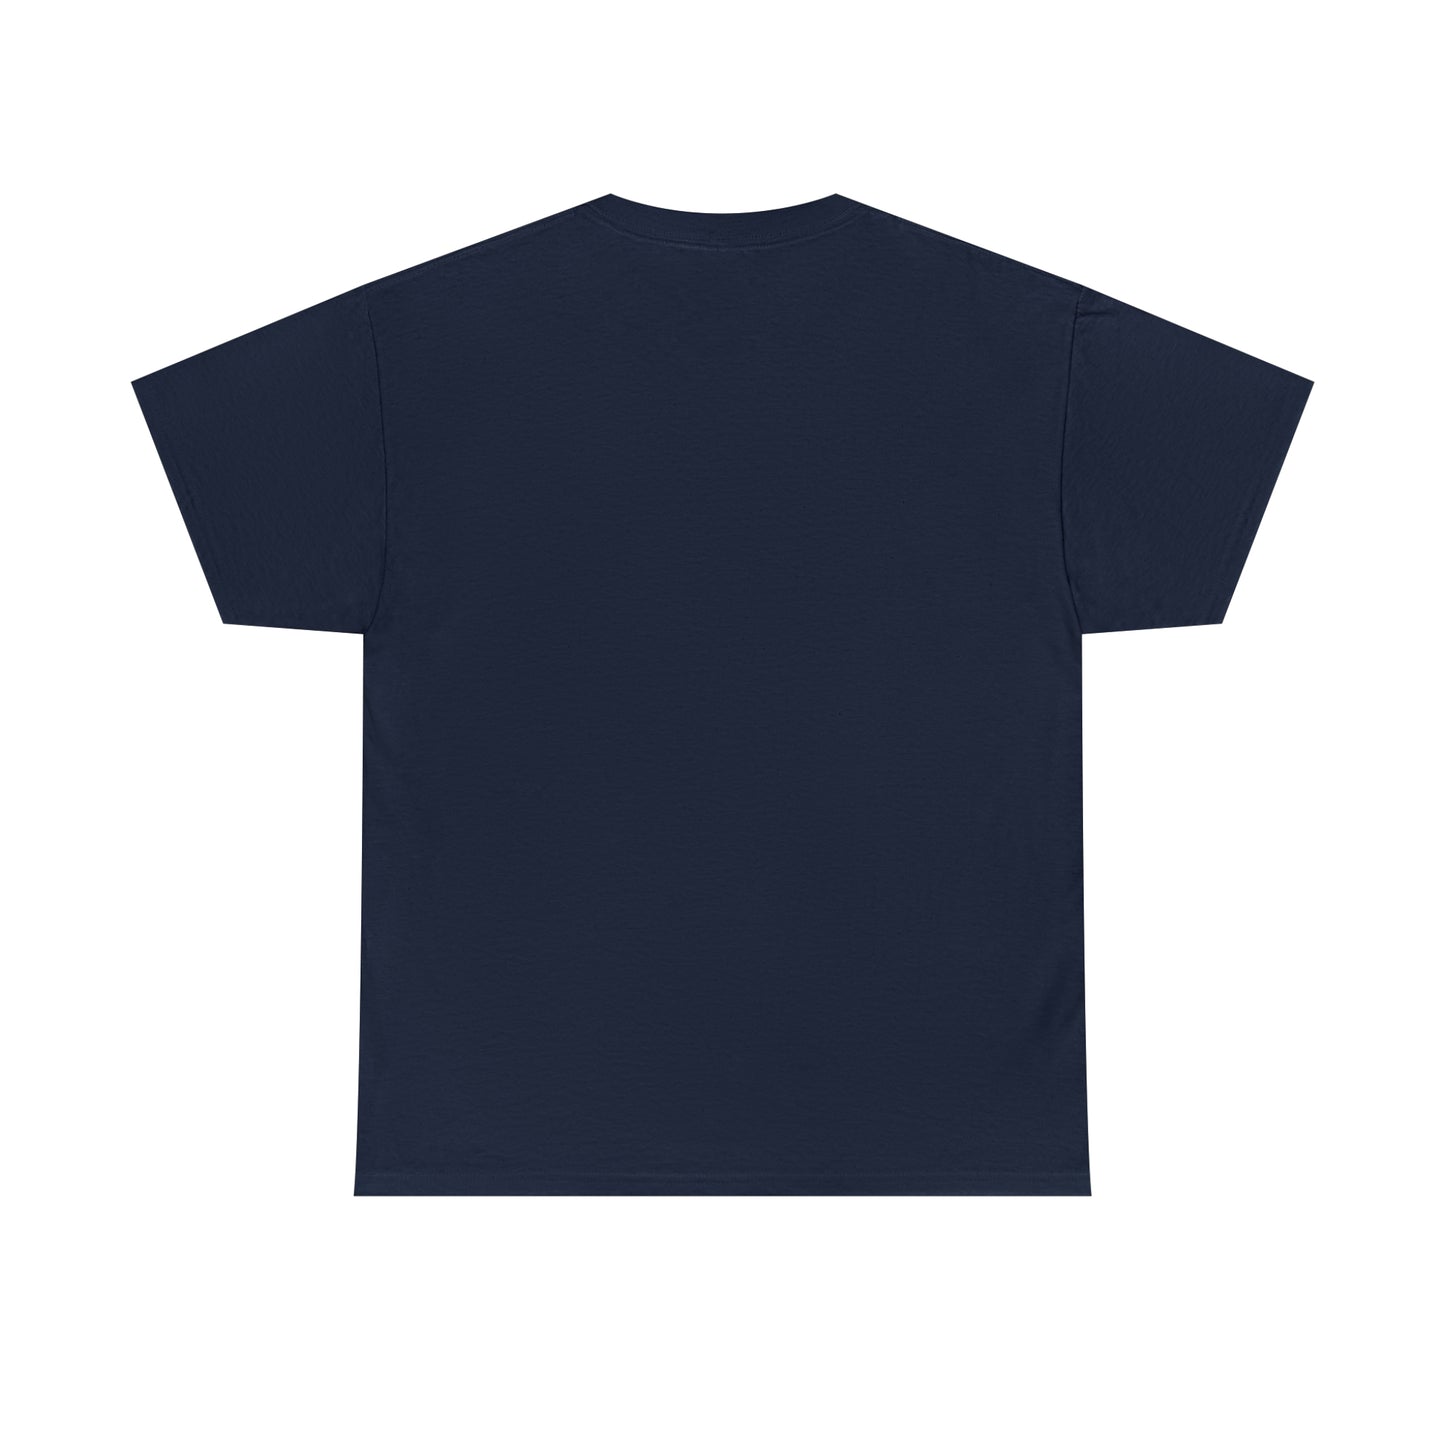 Colombian Roots Design 5: Unisex T-Shirt